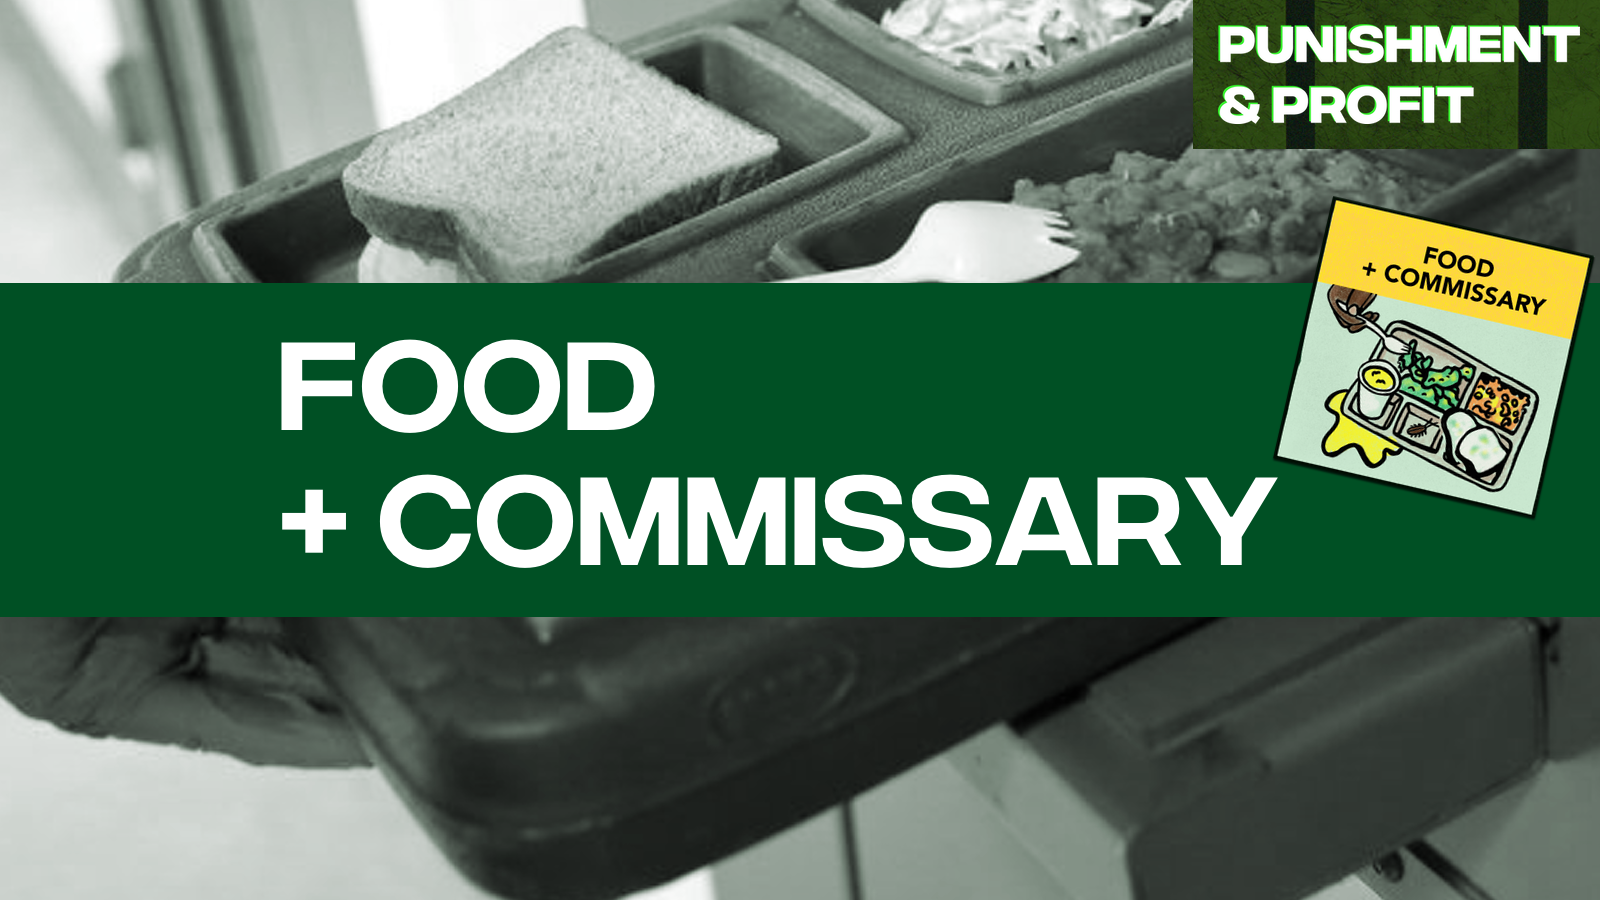 Punishment & Profit: Food & Commissary